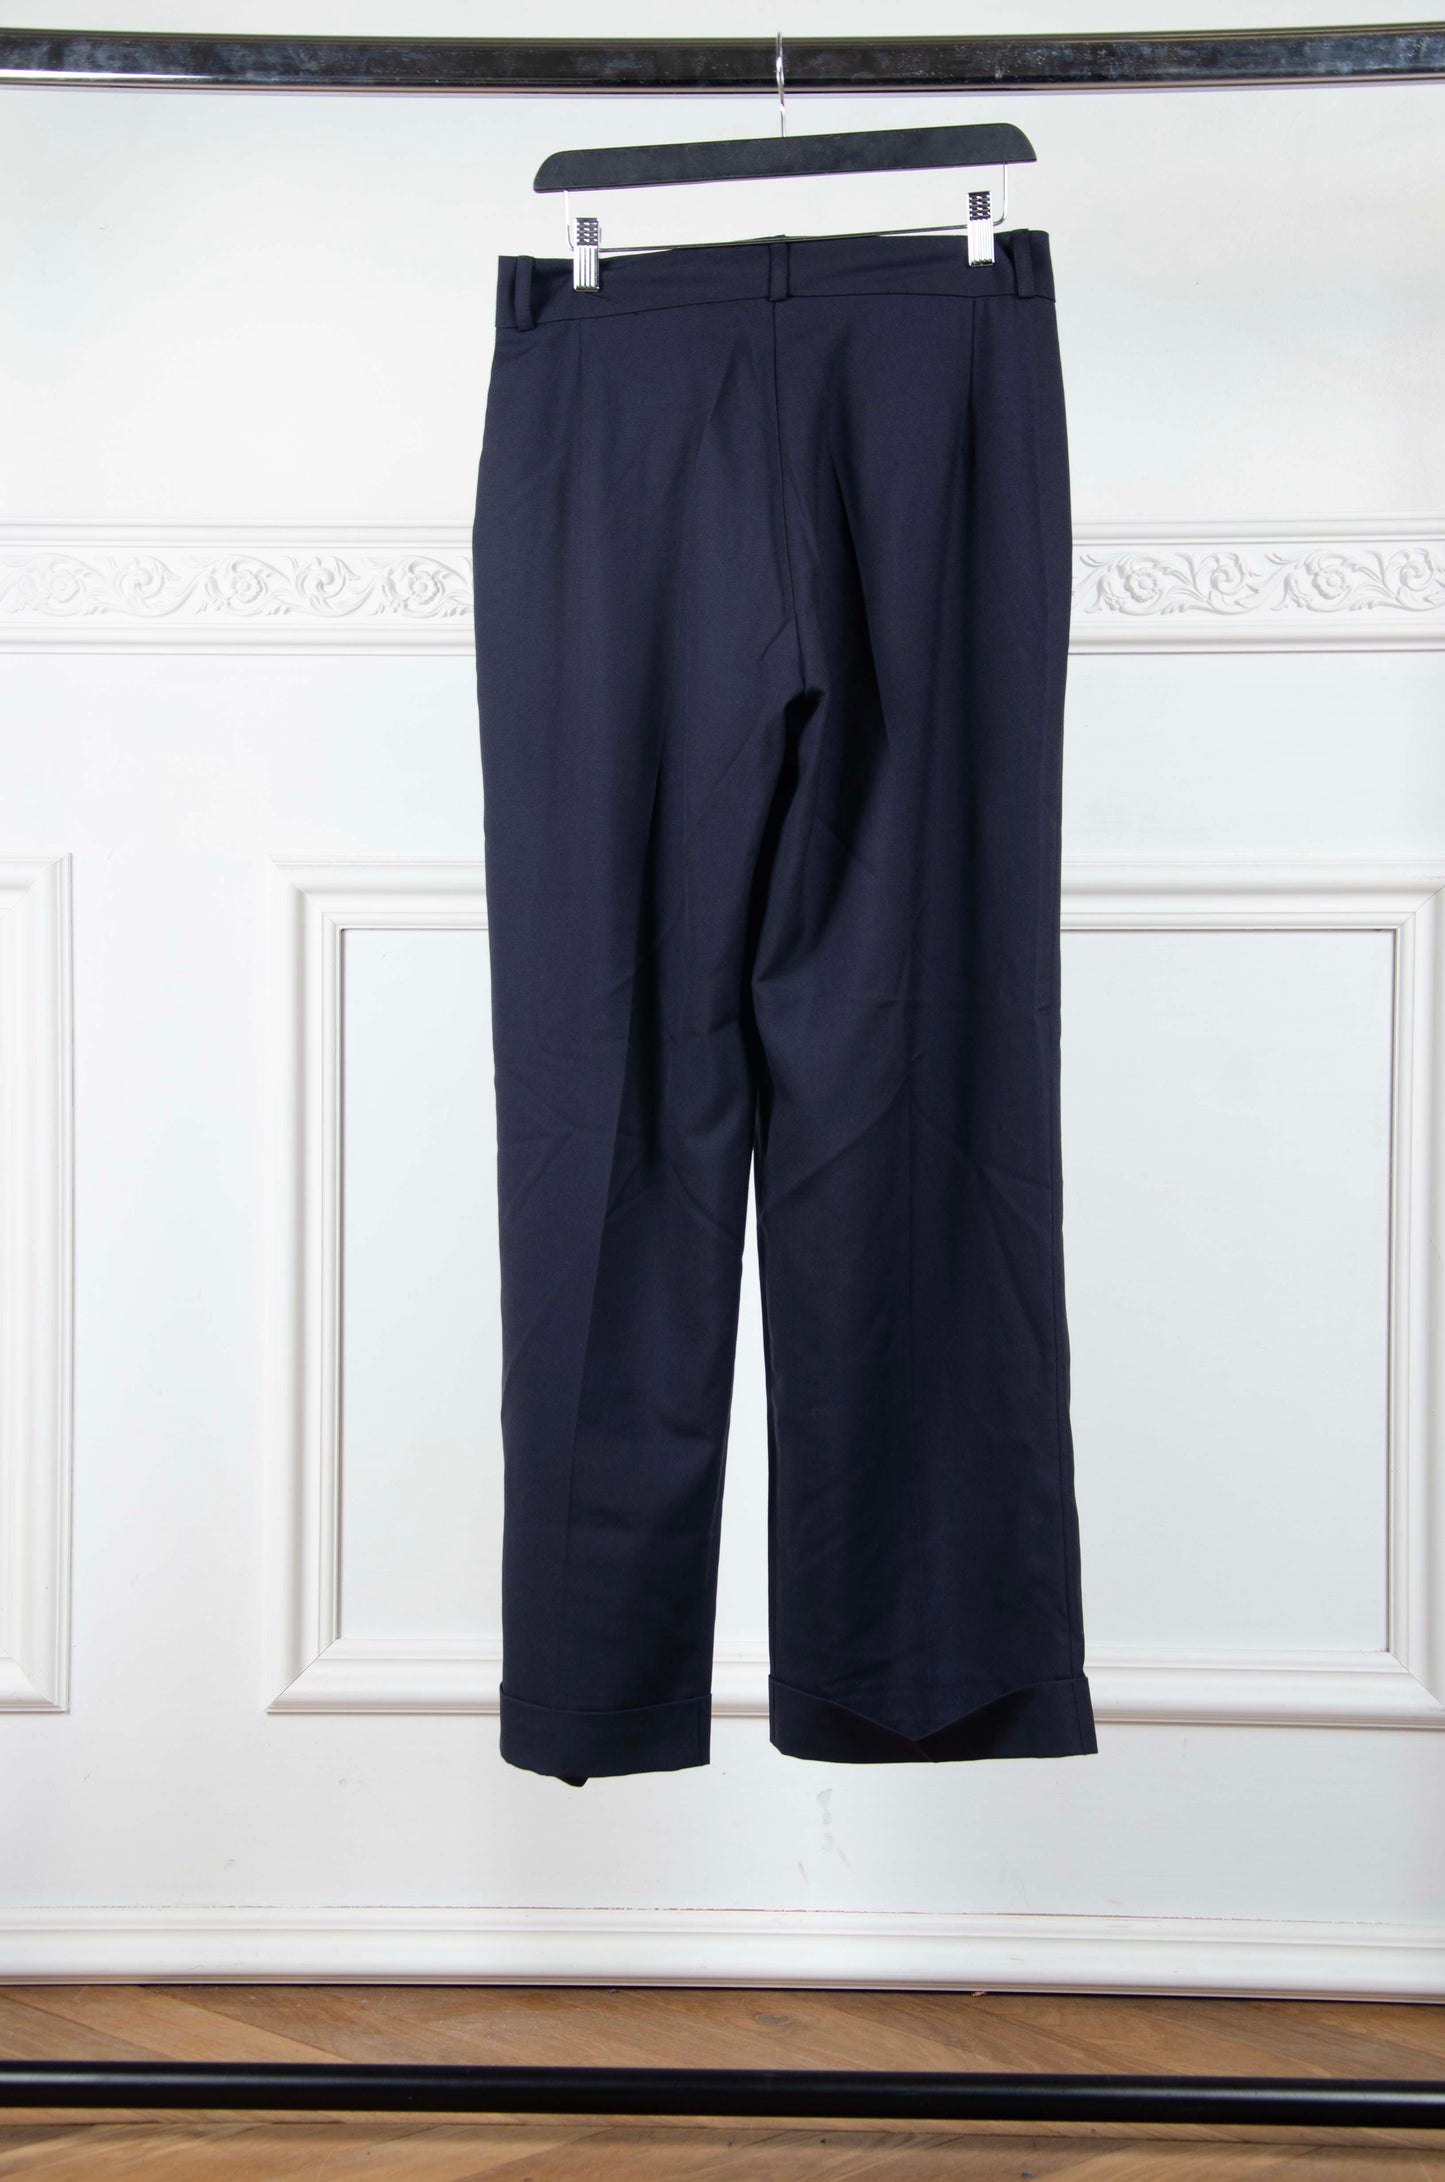 Navy Wool Pants - L